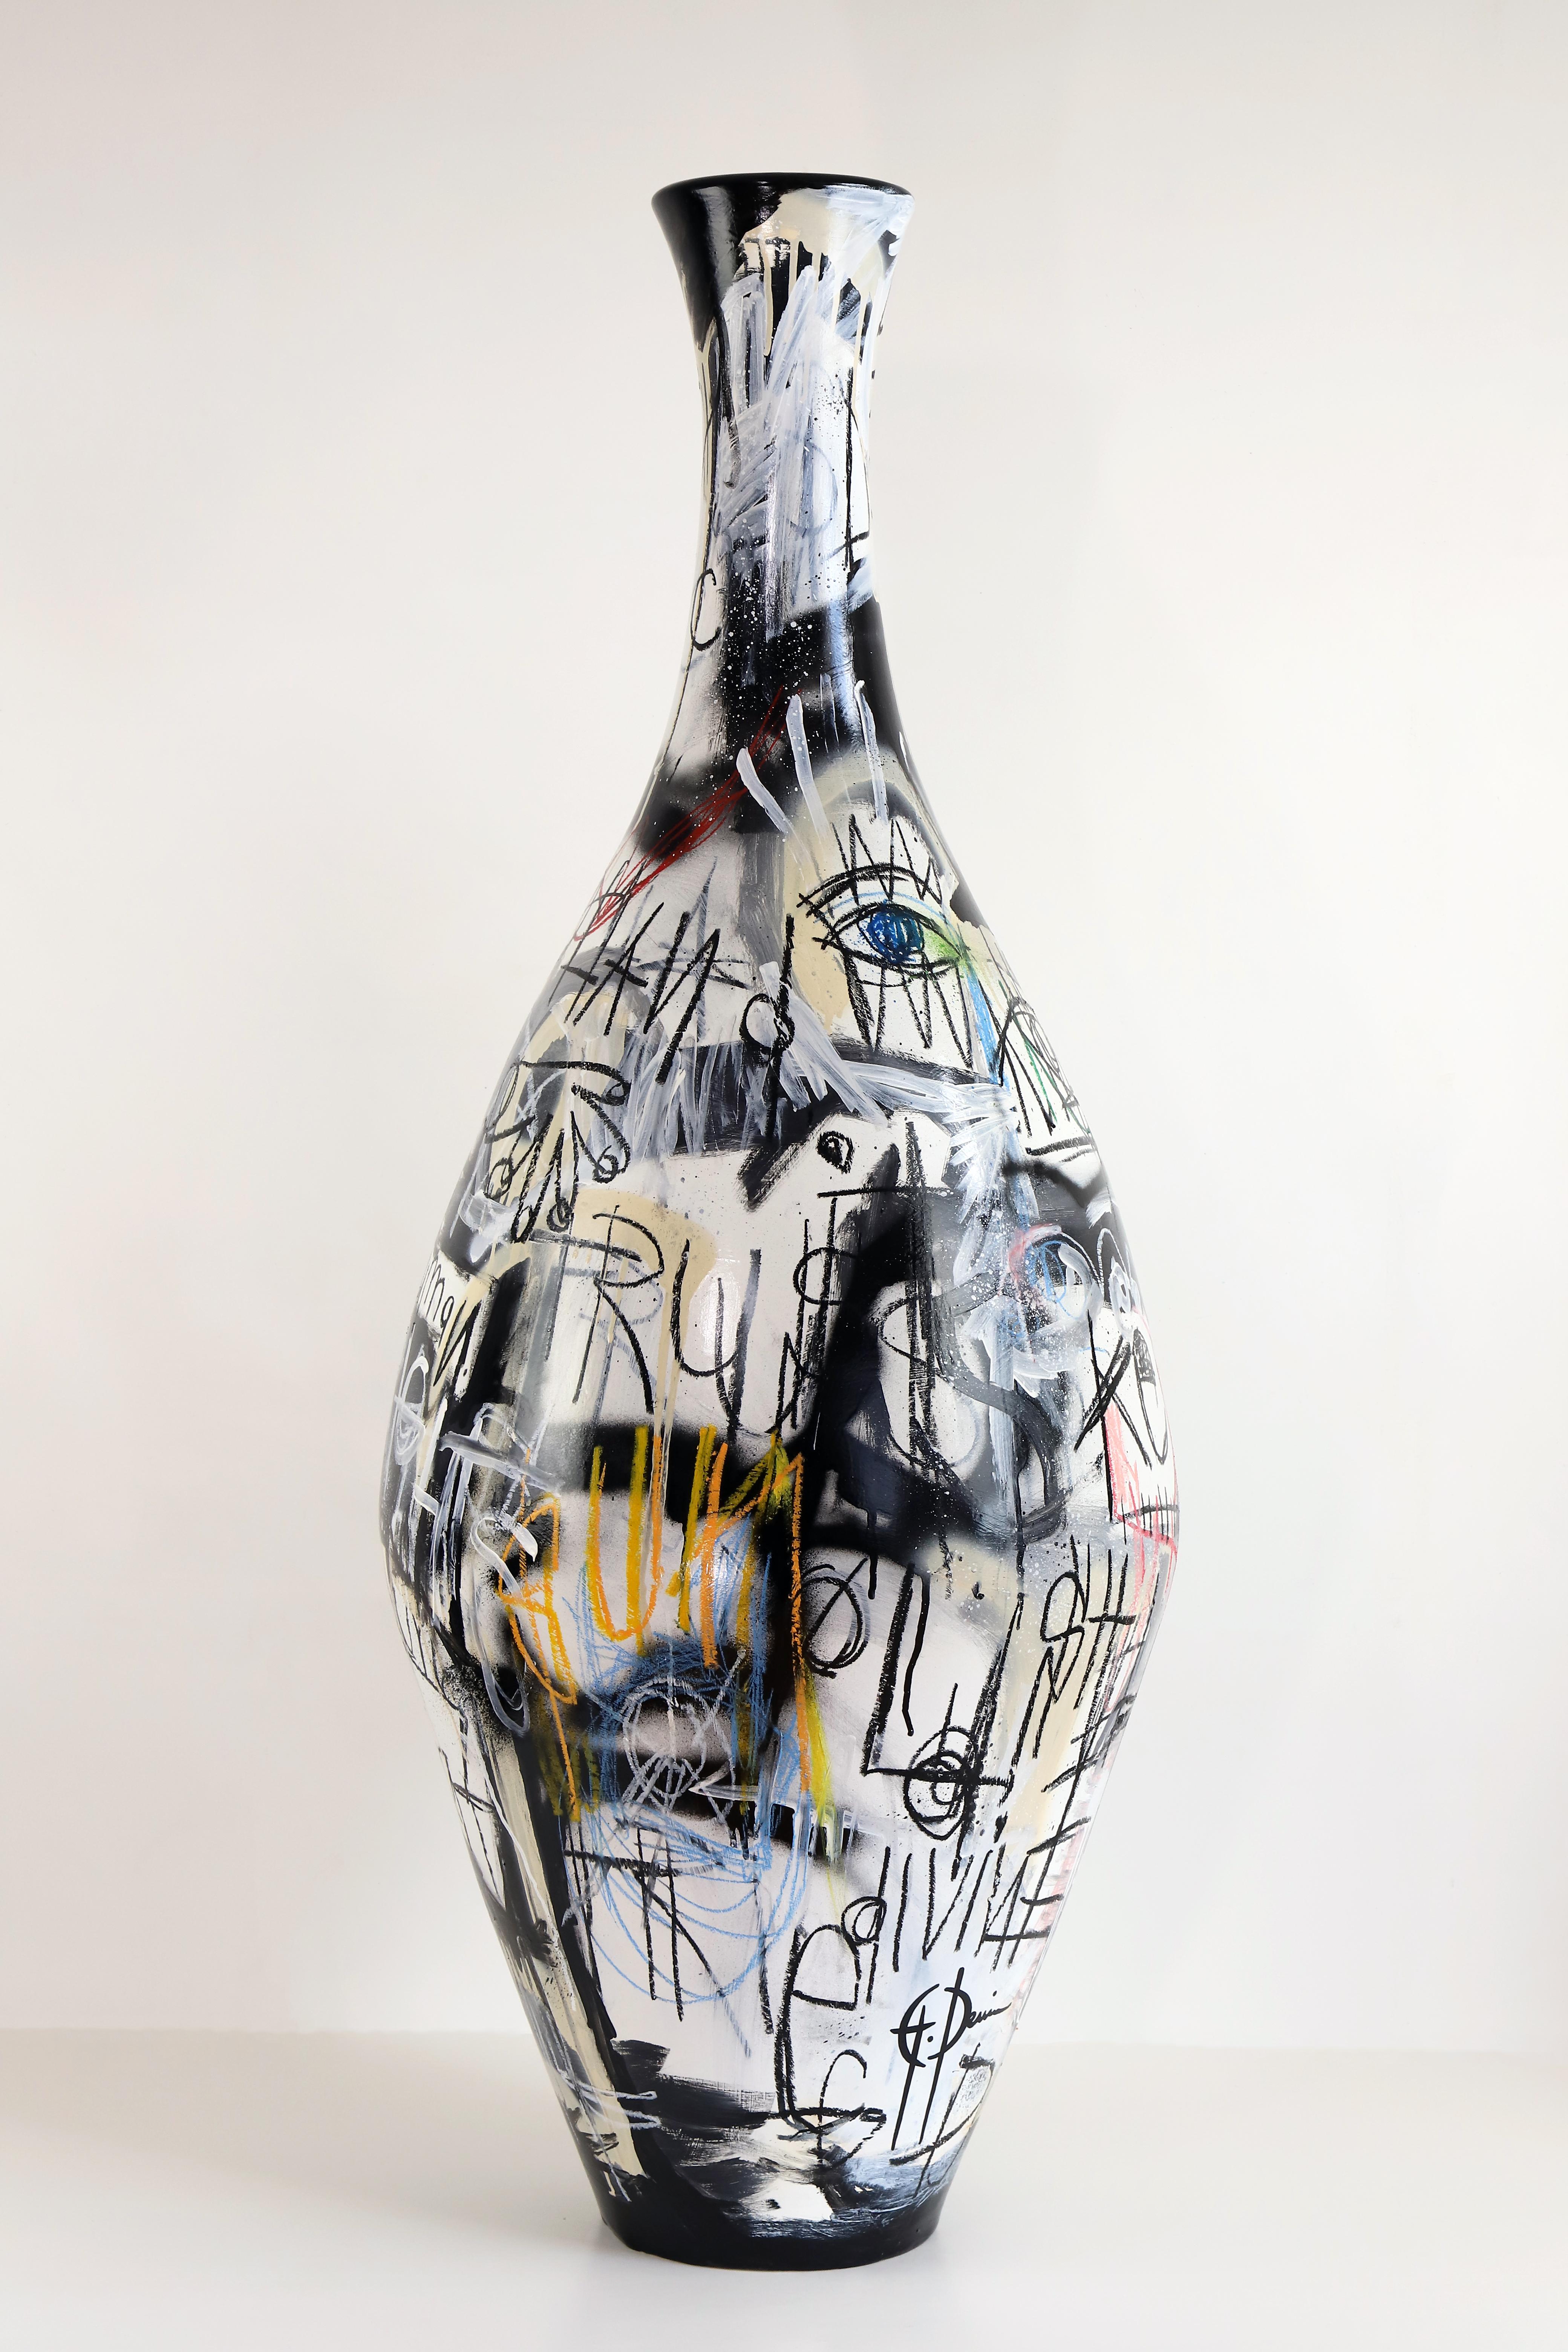 Unhuman Rights - Contemporary Sculpture by Grégoire Devin